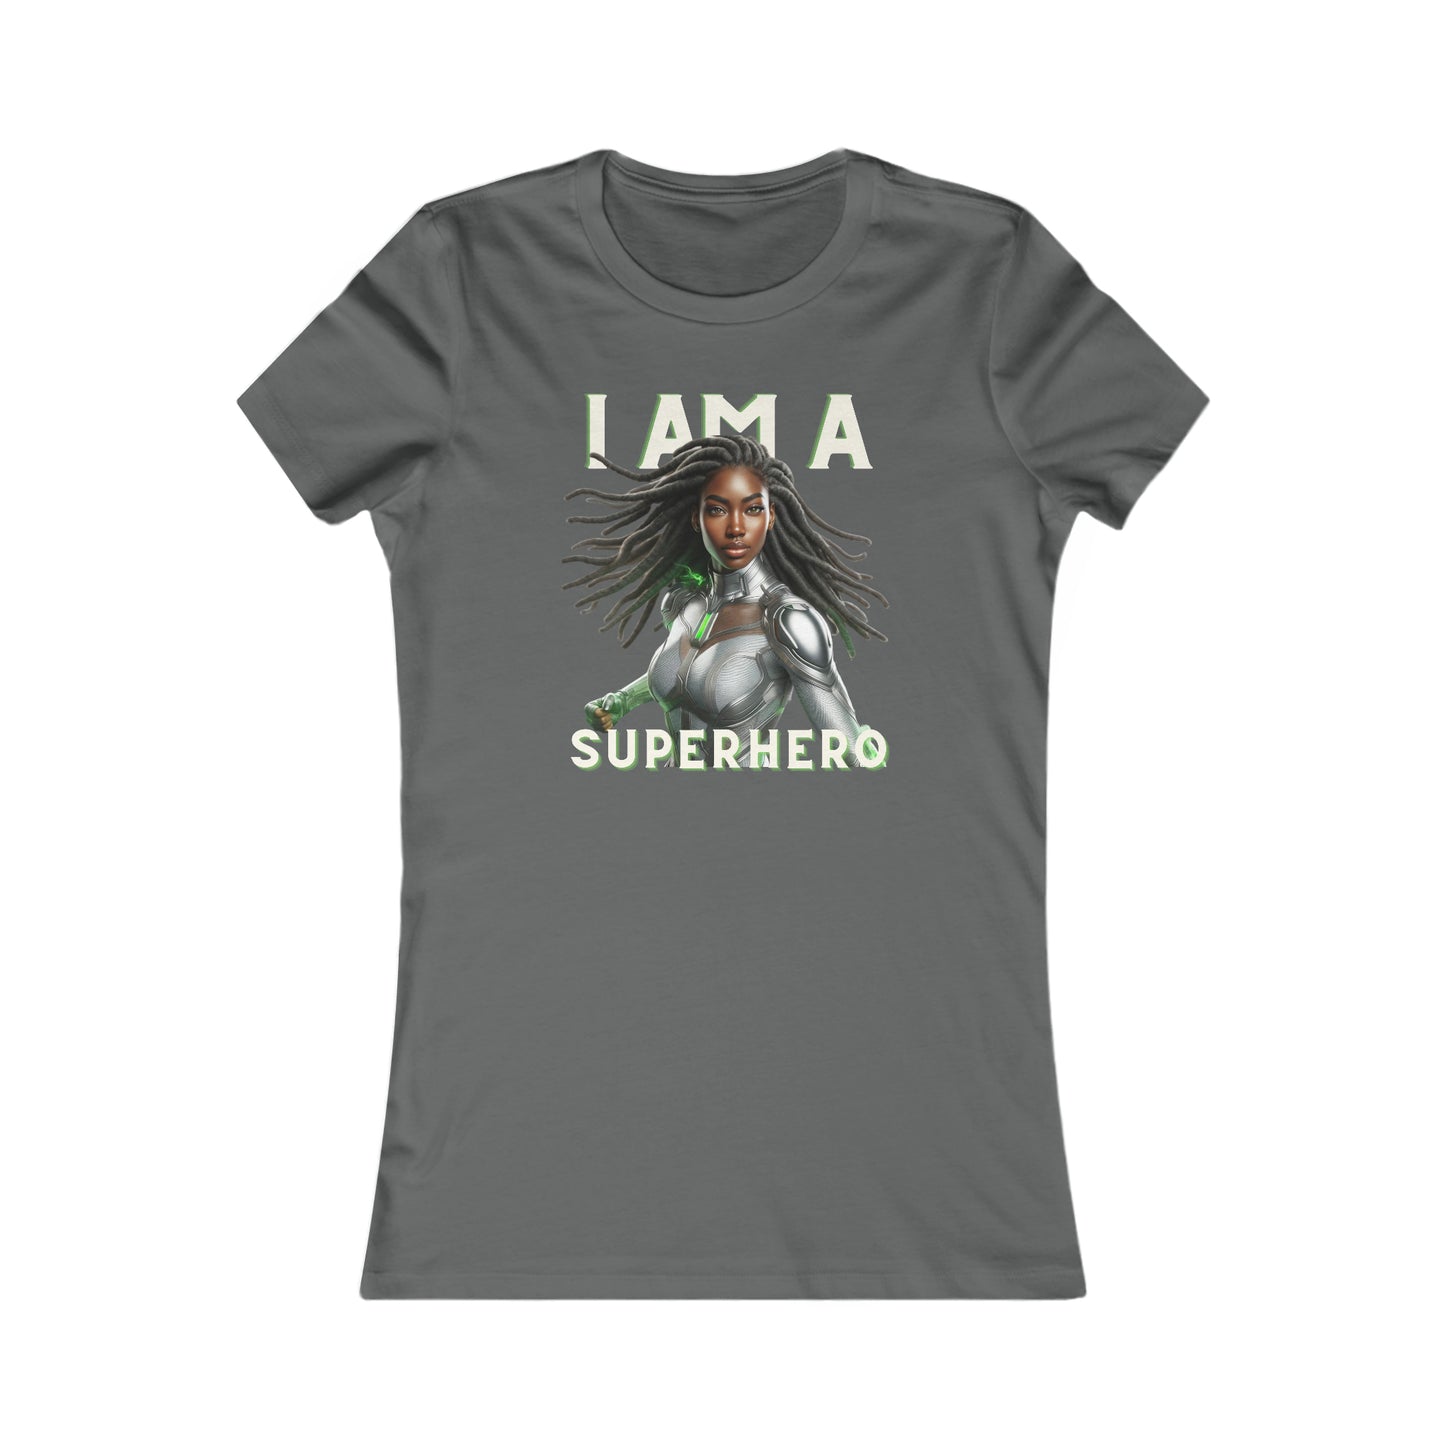 THE SILVER SOLDIER "I AM A SUPERHERO" | Adult Women's Favorite Tee | Superhero Fashion